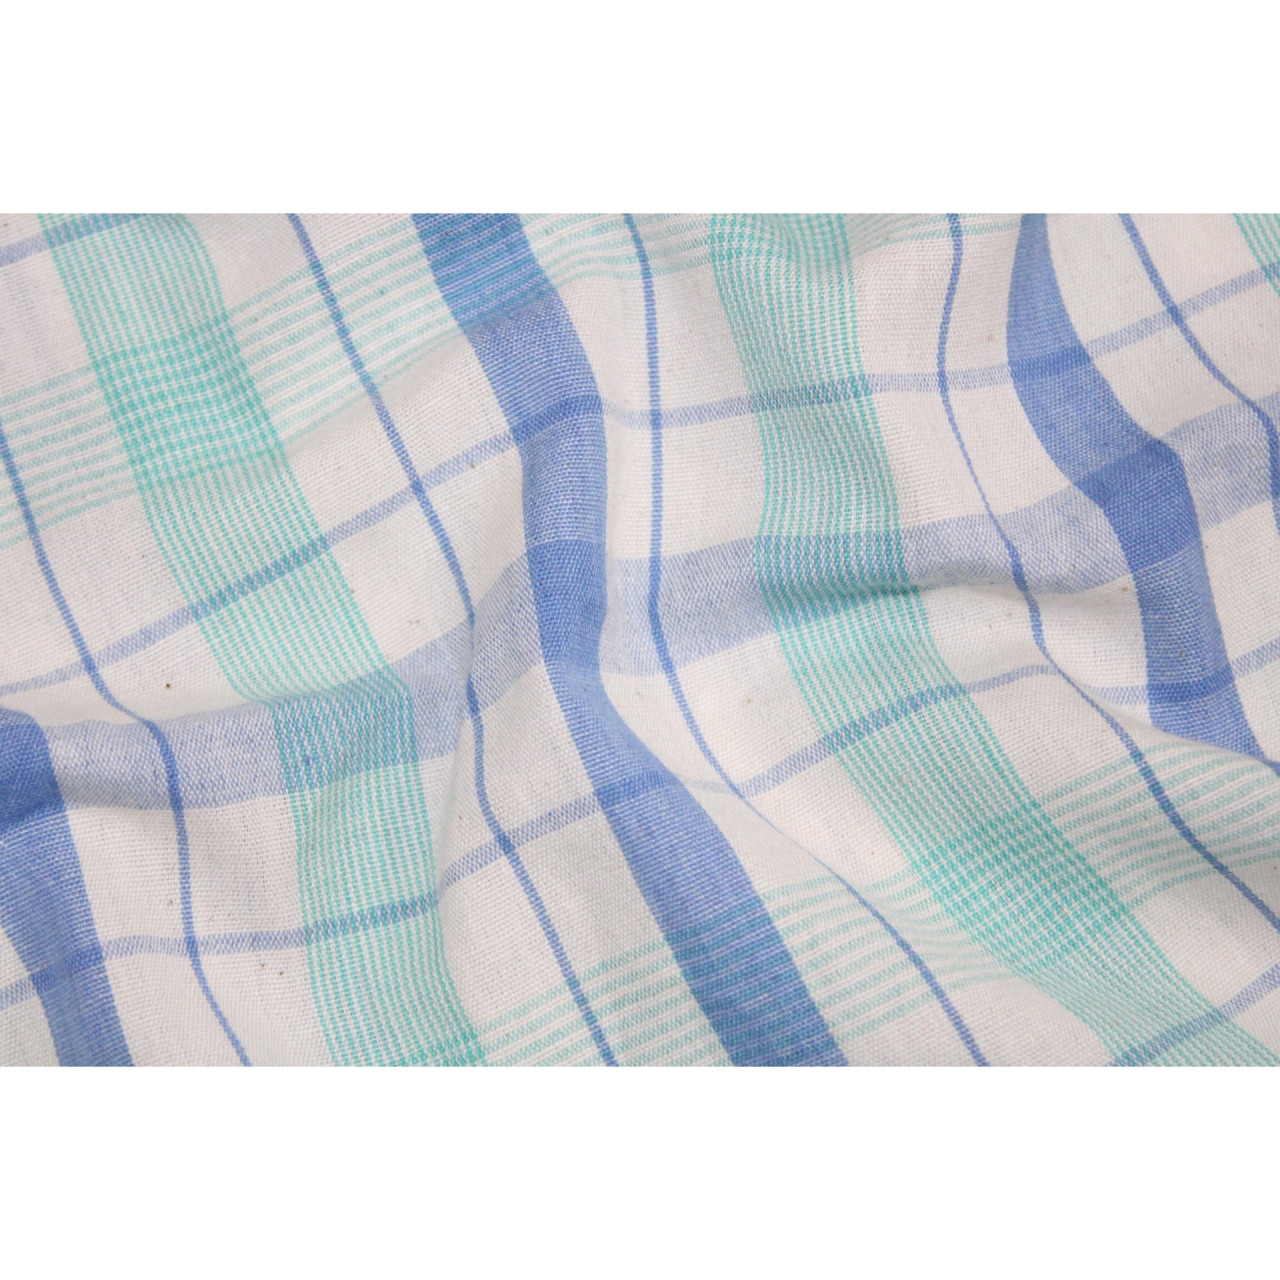 (1529) Cotton Azo-free dyed yardage from Phulia - Sea green, blue, white, horizontal stripes